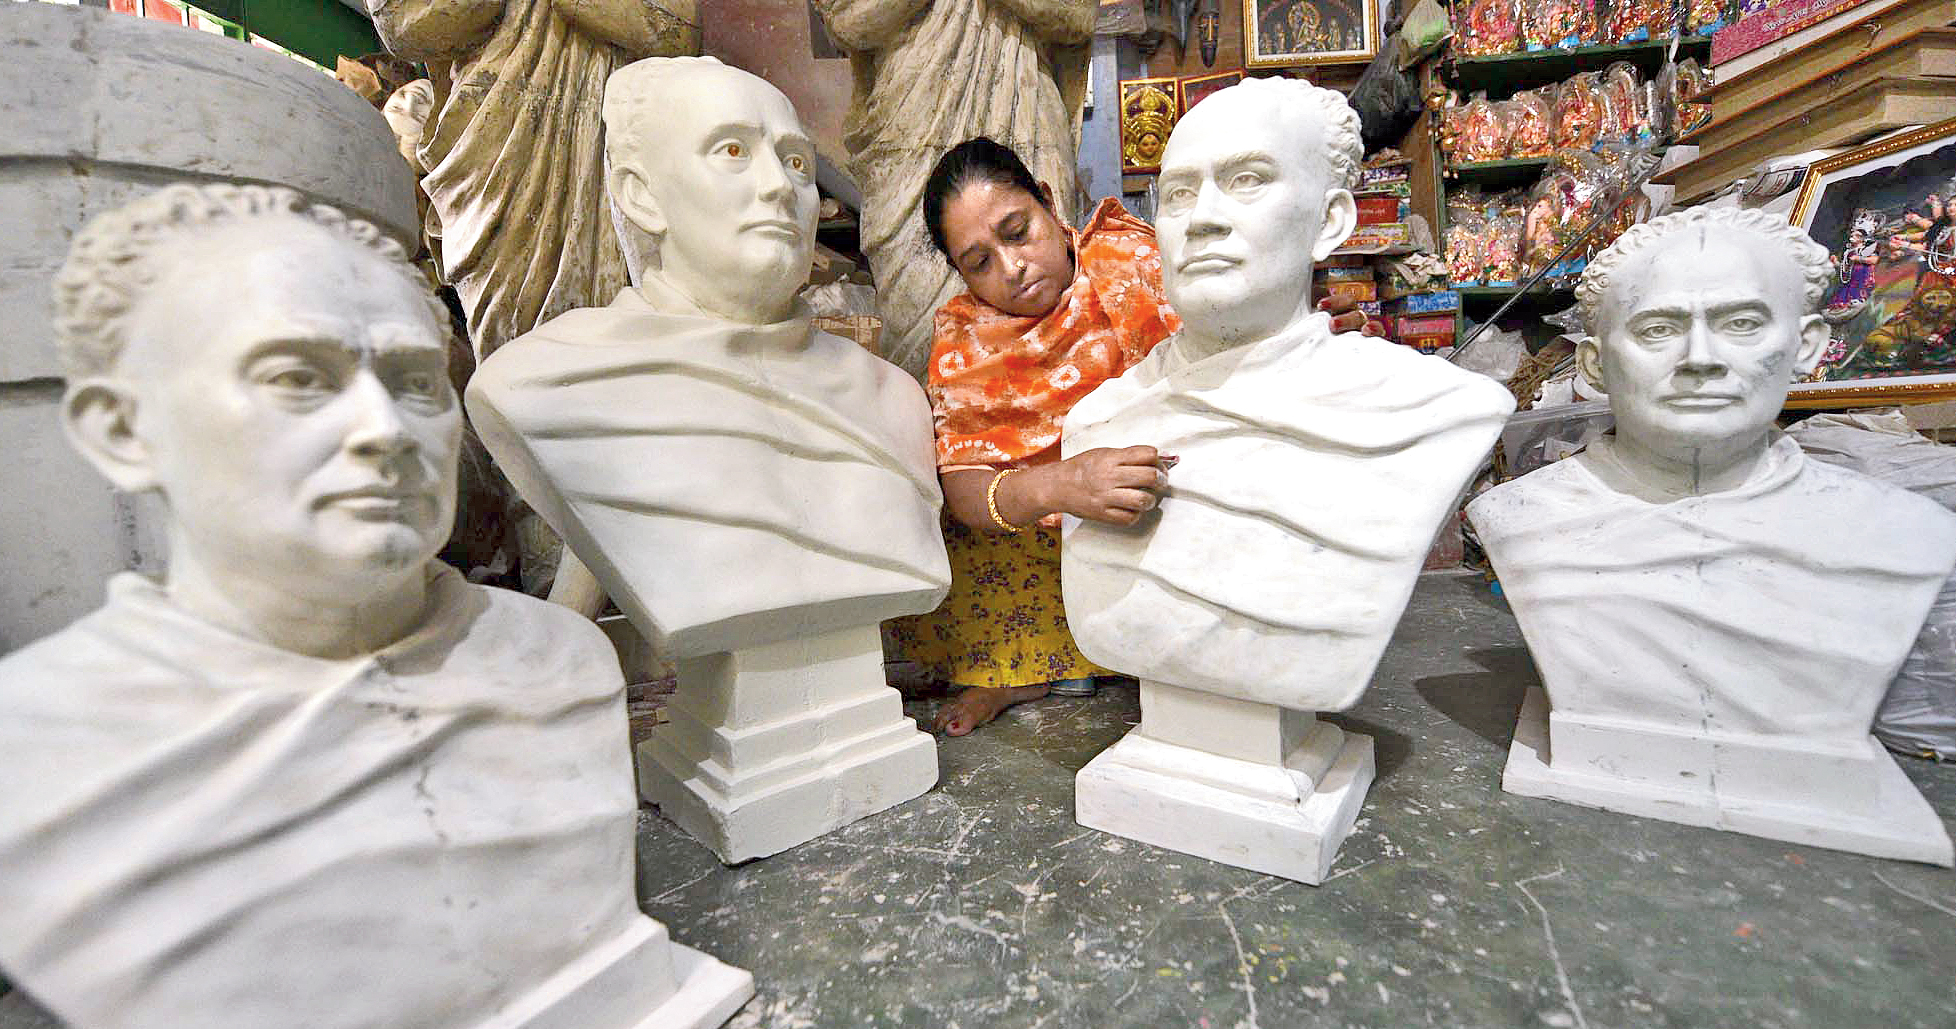 Smritikana Pal with busts of Ishwarchandra Vidyasagar at her workshop in Kumartuli. 
